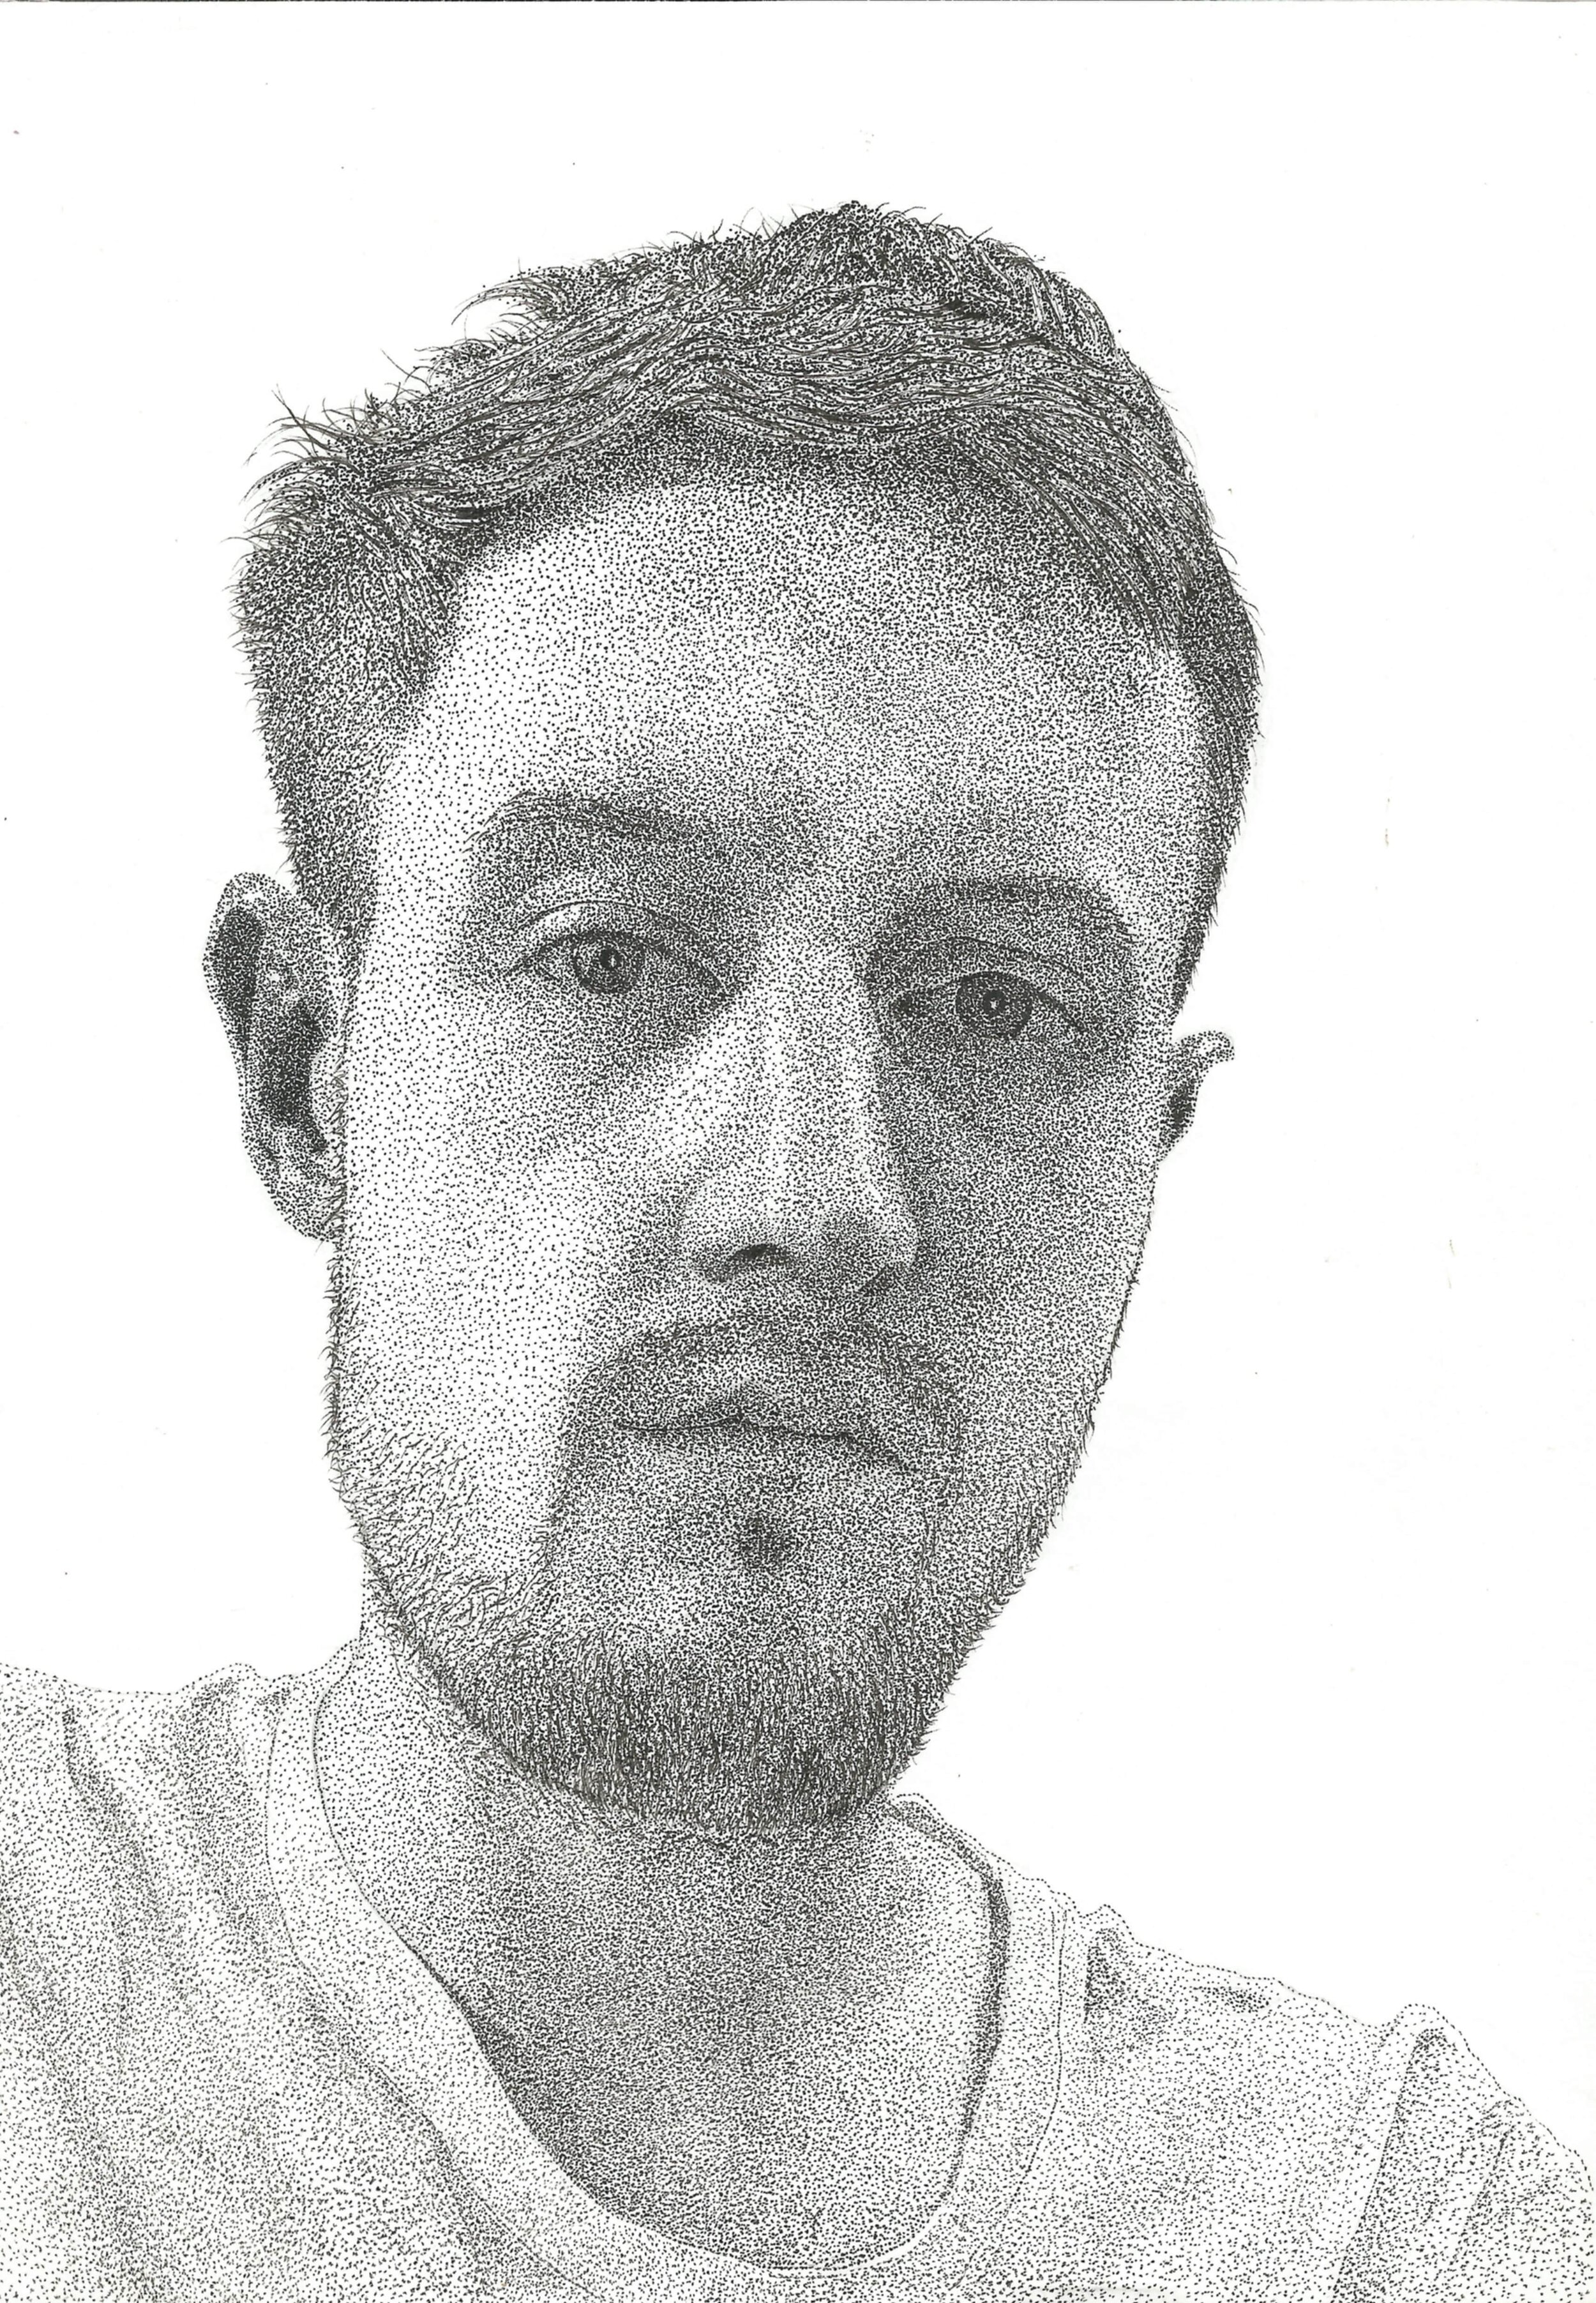 Self Portrait, June, 2021